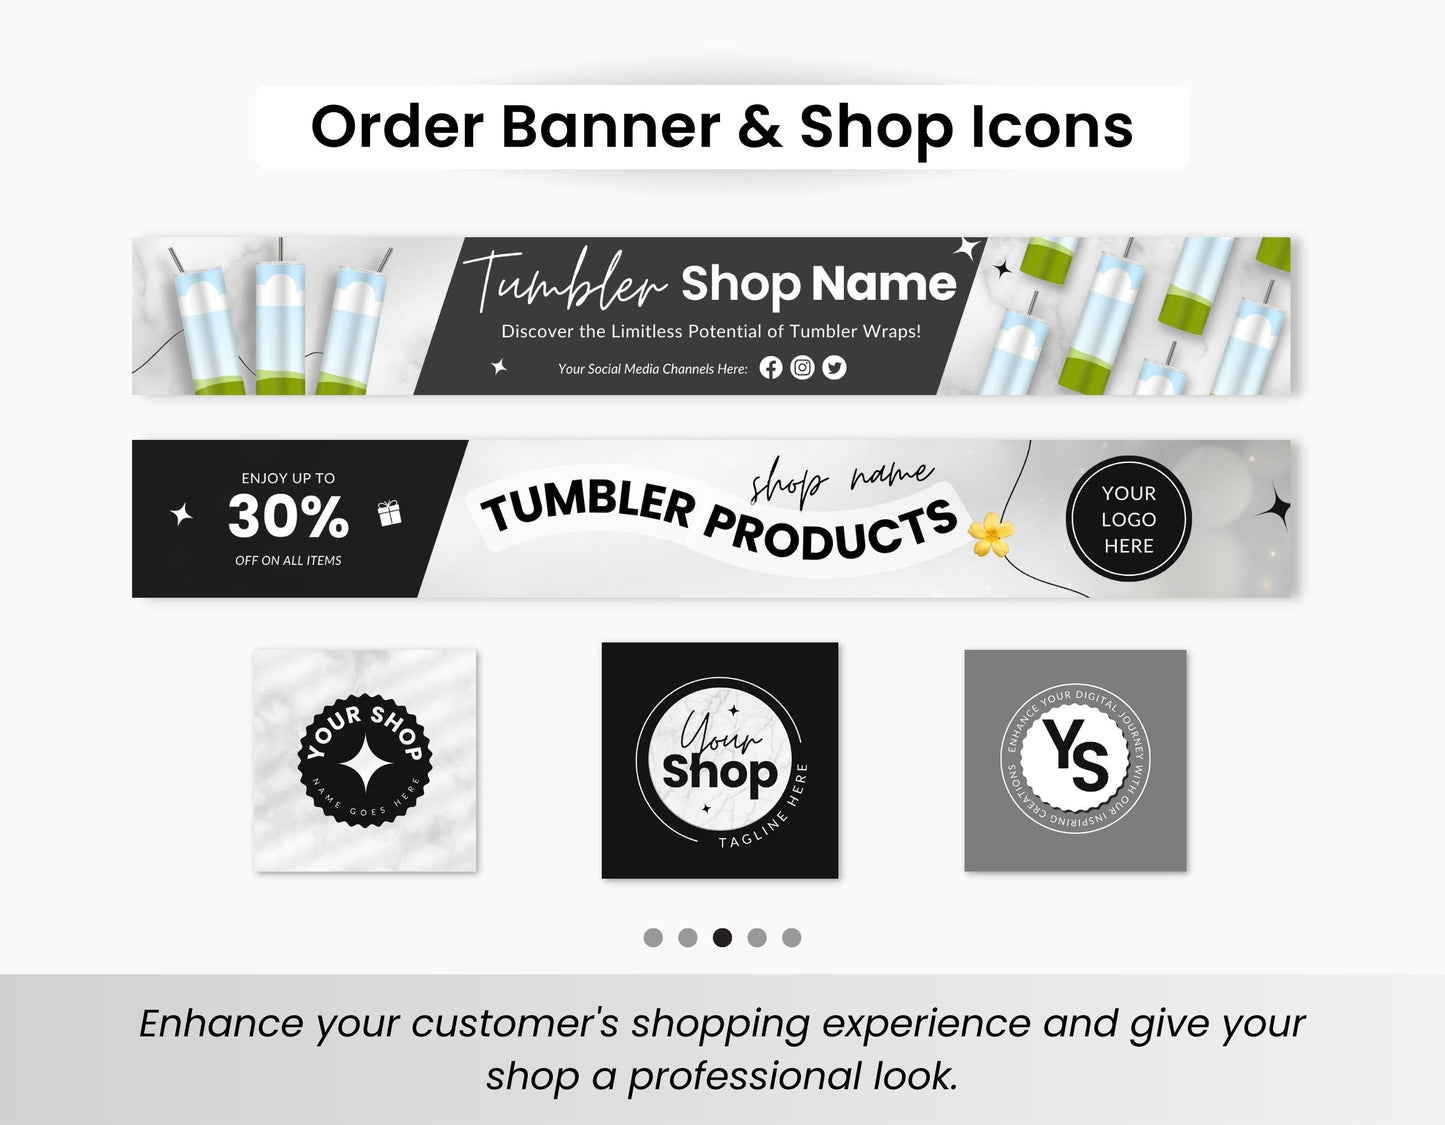 Etsy Digital Shop Skinny Tumblers Bundle Kit DigiPax